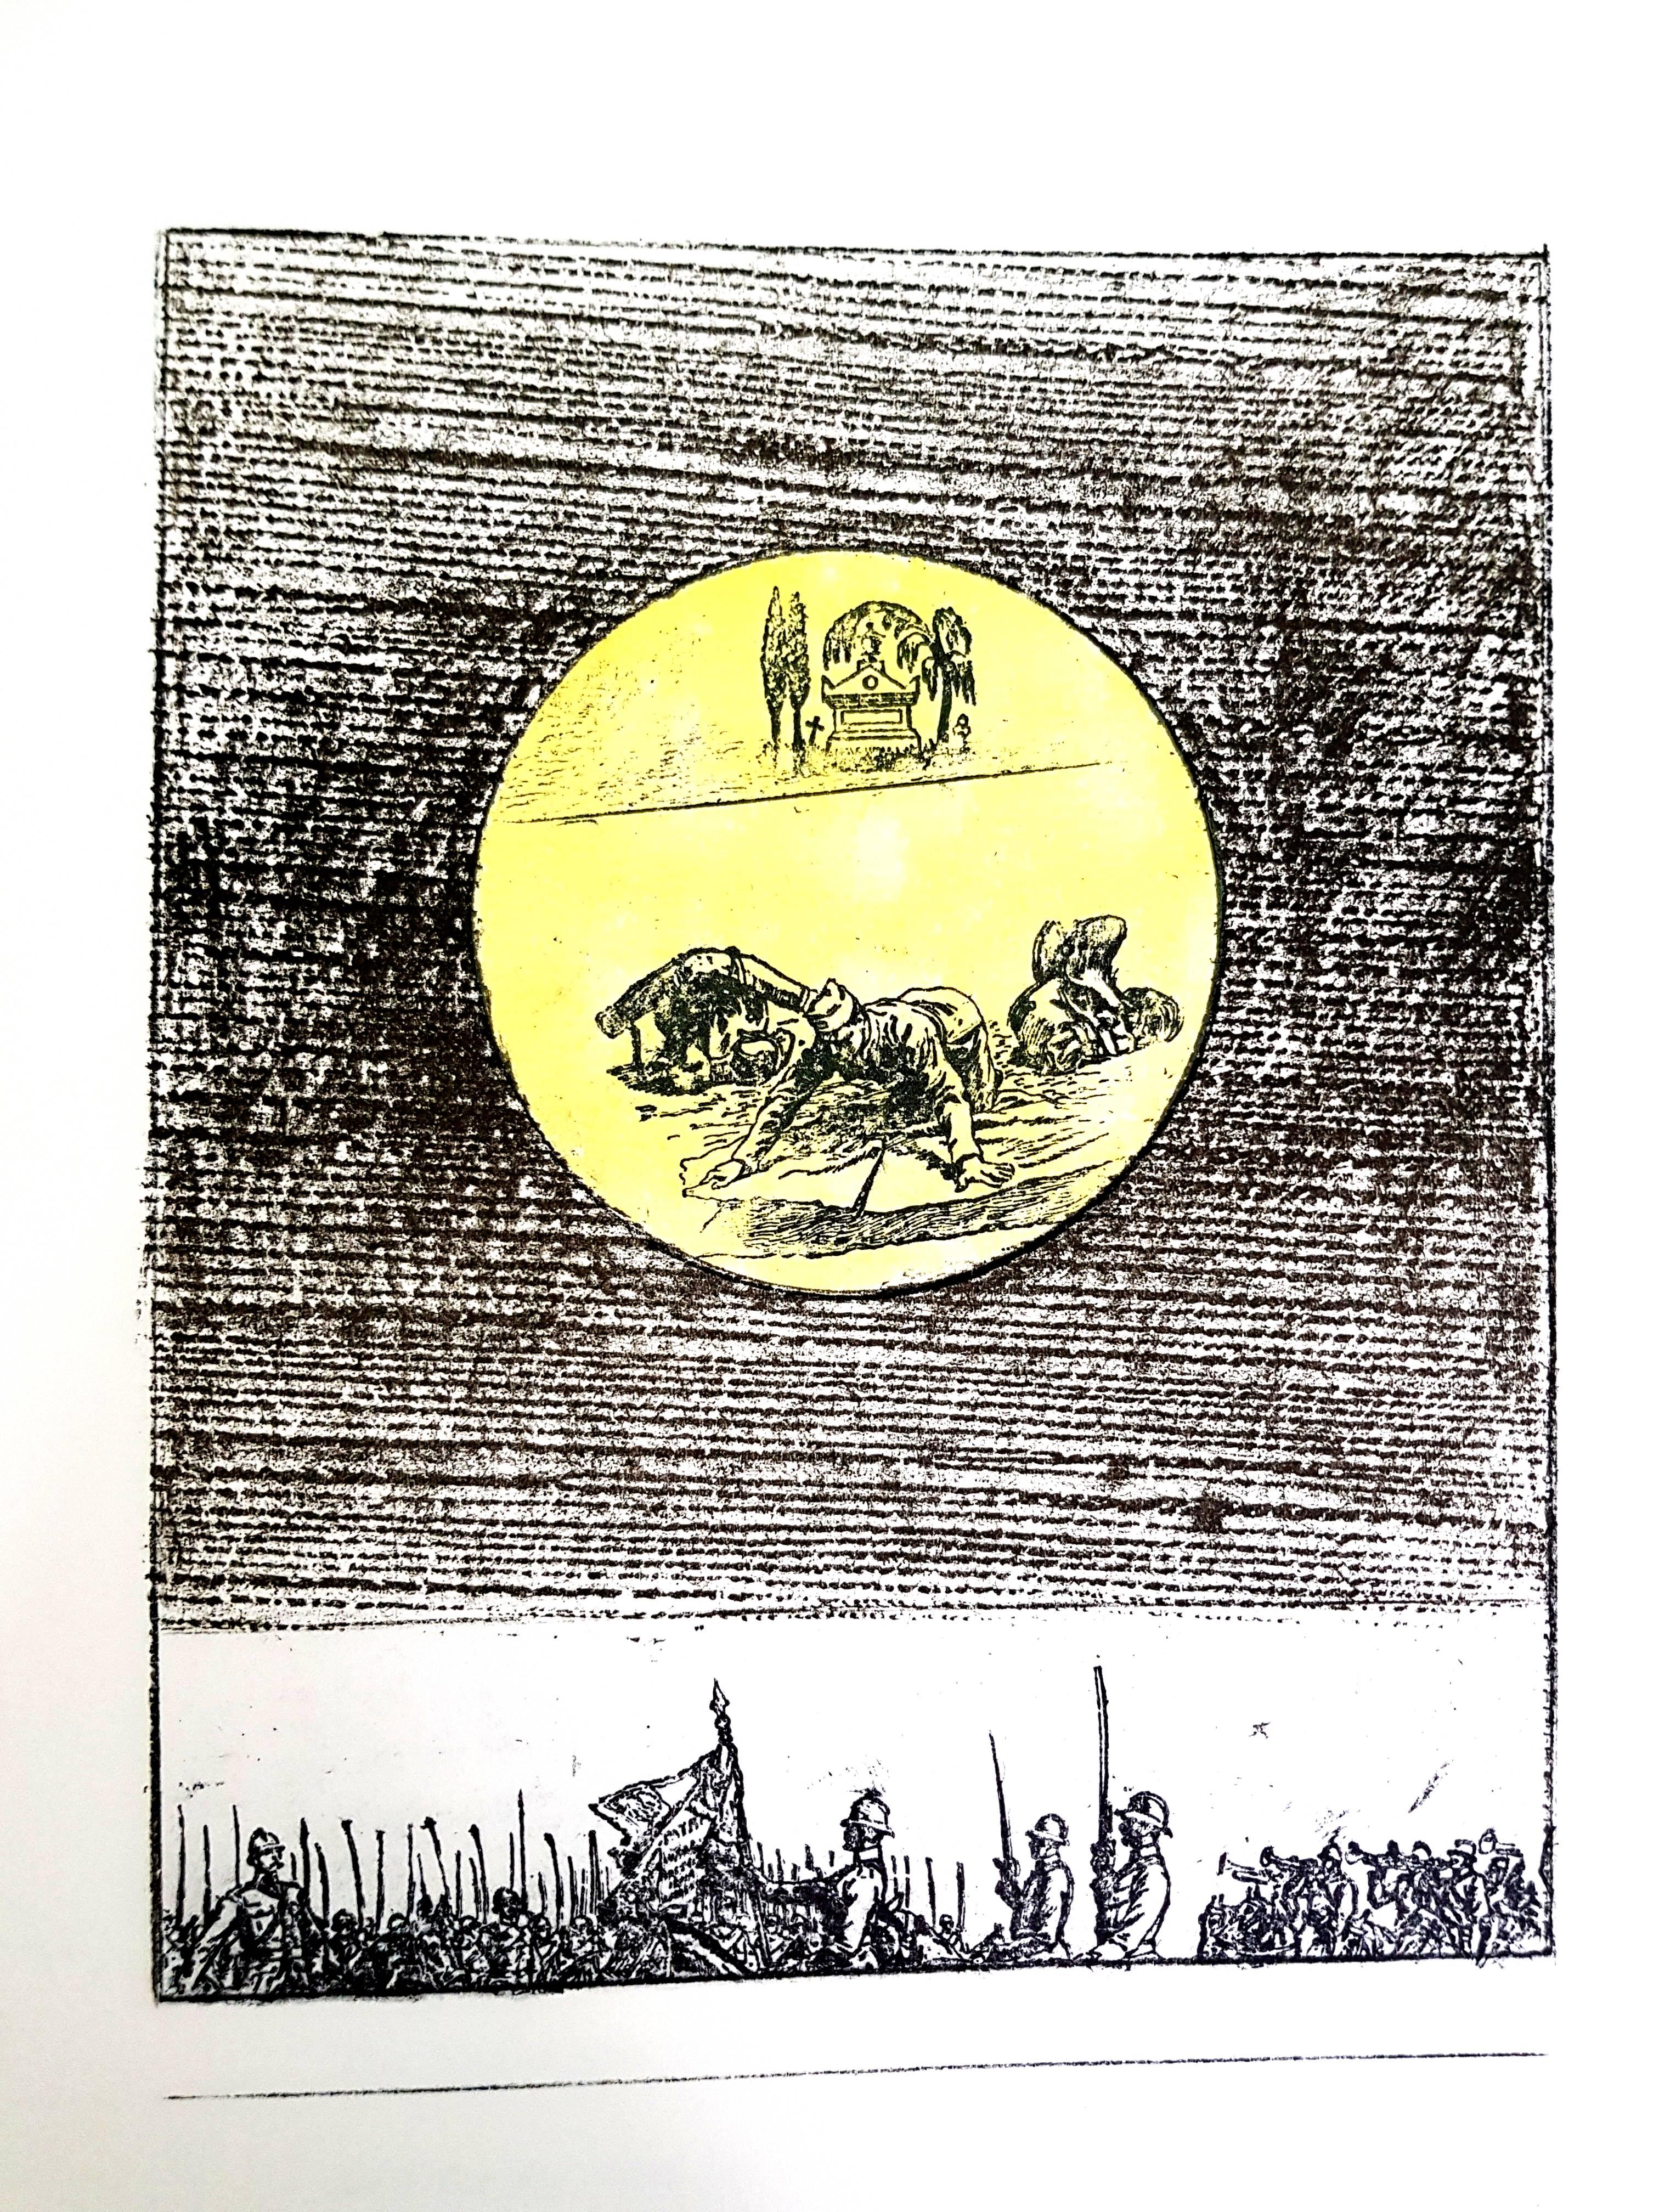 Max Ernst (1891-1976) 
Georges Ribemont-Dessaignes, La Ballade du Soldat, Pierre Chave, Vence, 1972 
Farblithografien auf Arches-Papier
1972
Abmessungen: 40 x 30 cm
Referenz: Spies & Leppien 218

Max Ernst
Max Ernst, der in den 1910er und 1920er